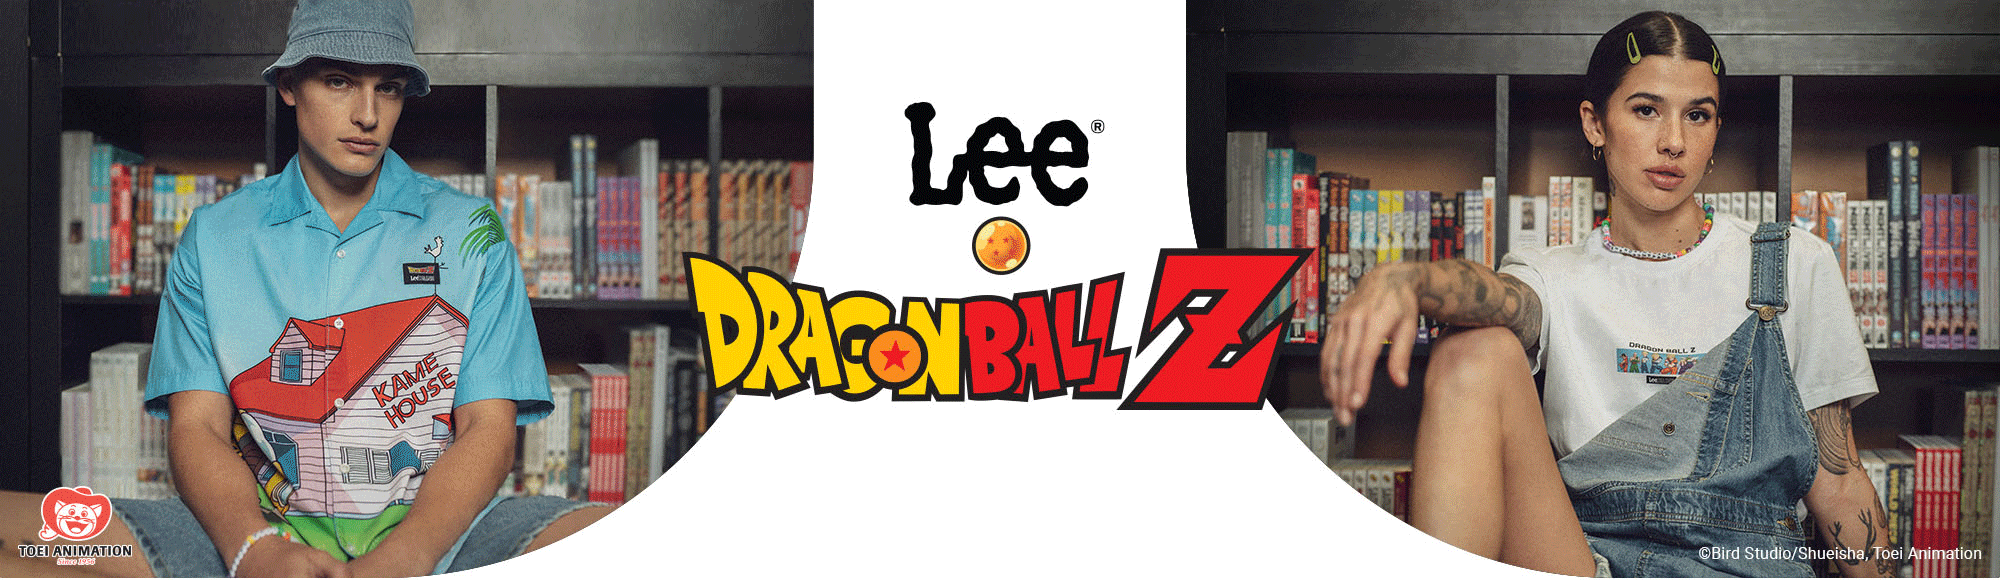 Lee and Dragon Ball Z